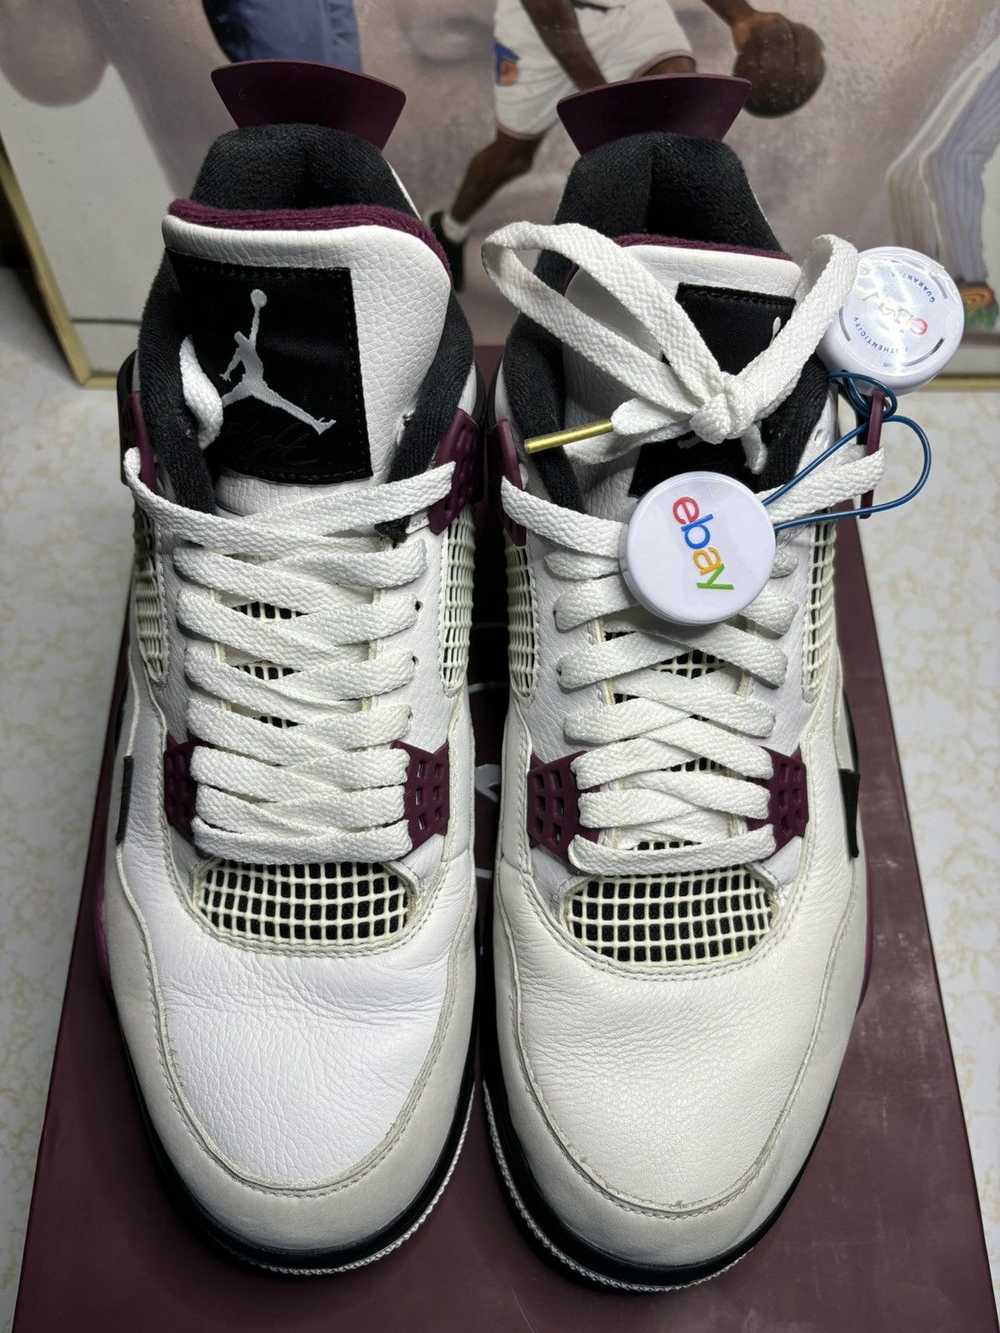 Jordan Brand Jordan Retro 4 “PSG” - image 2